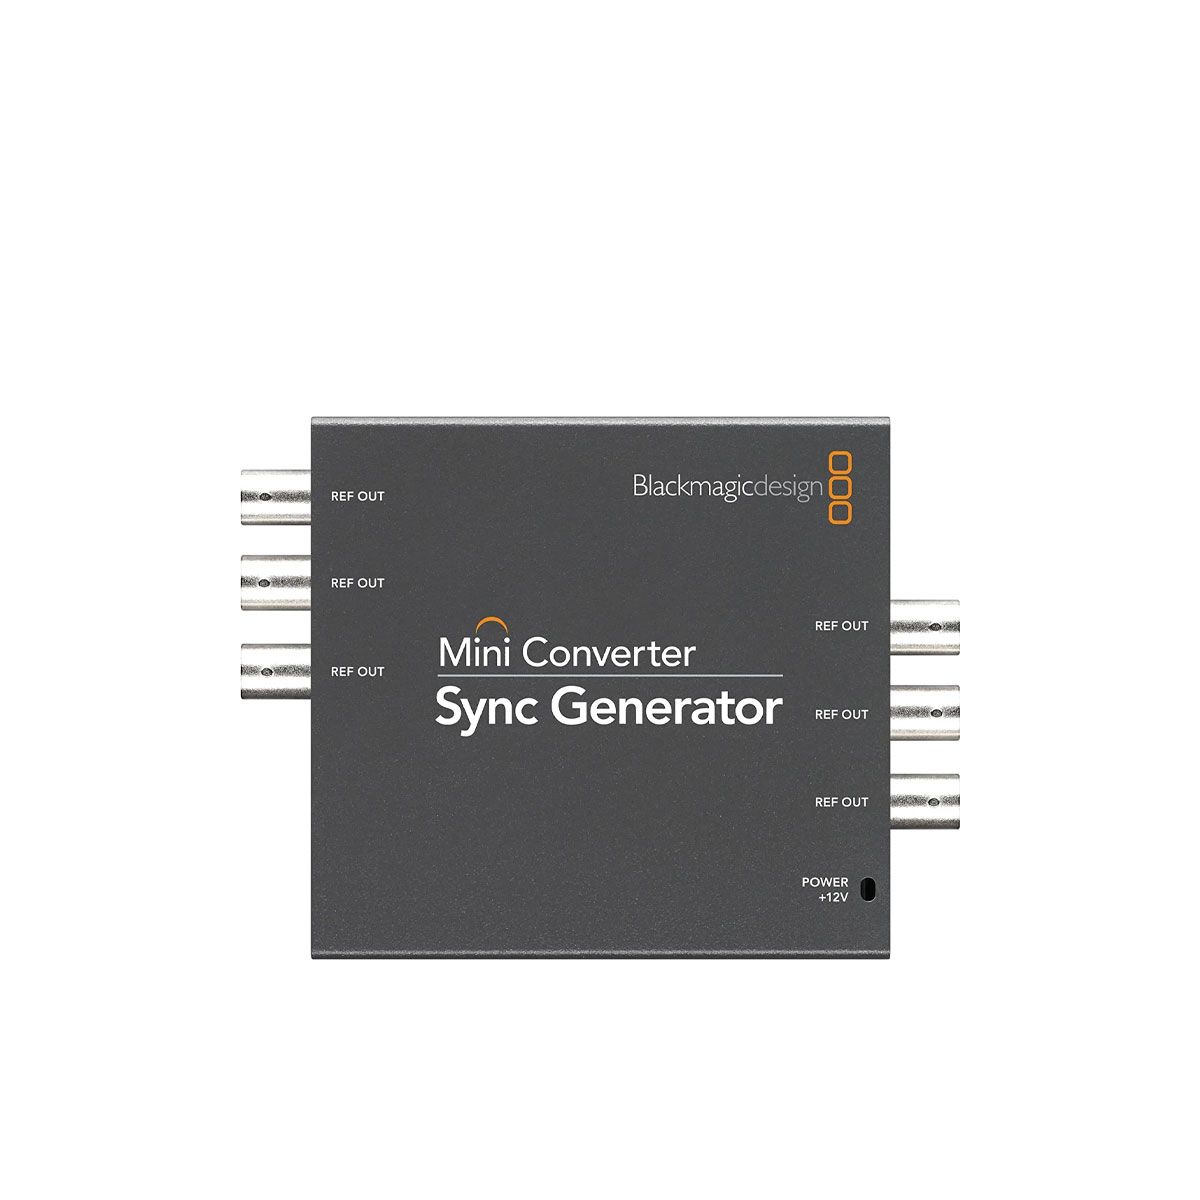  BlackMagic Mini Converter Sync Generator 